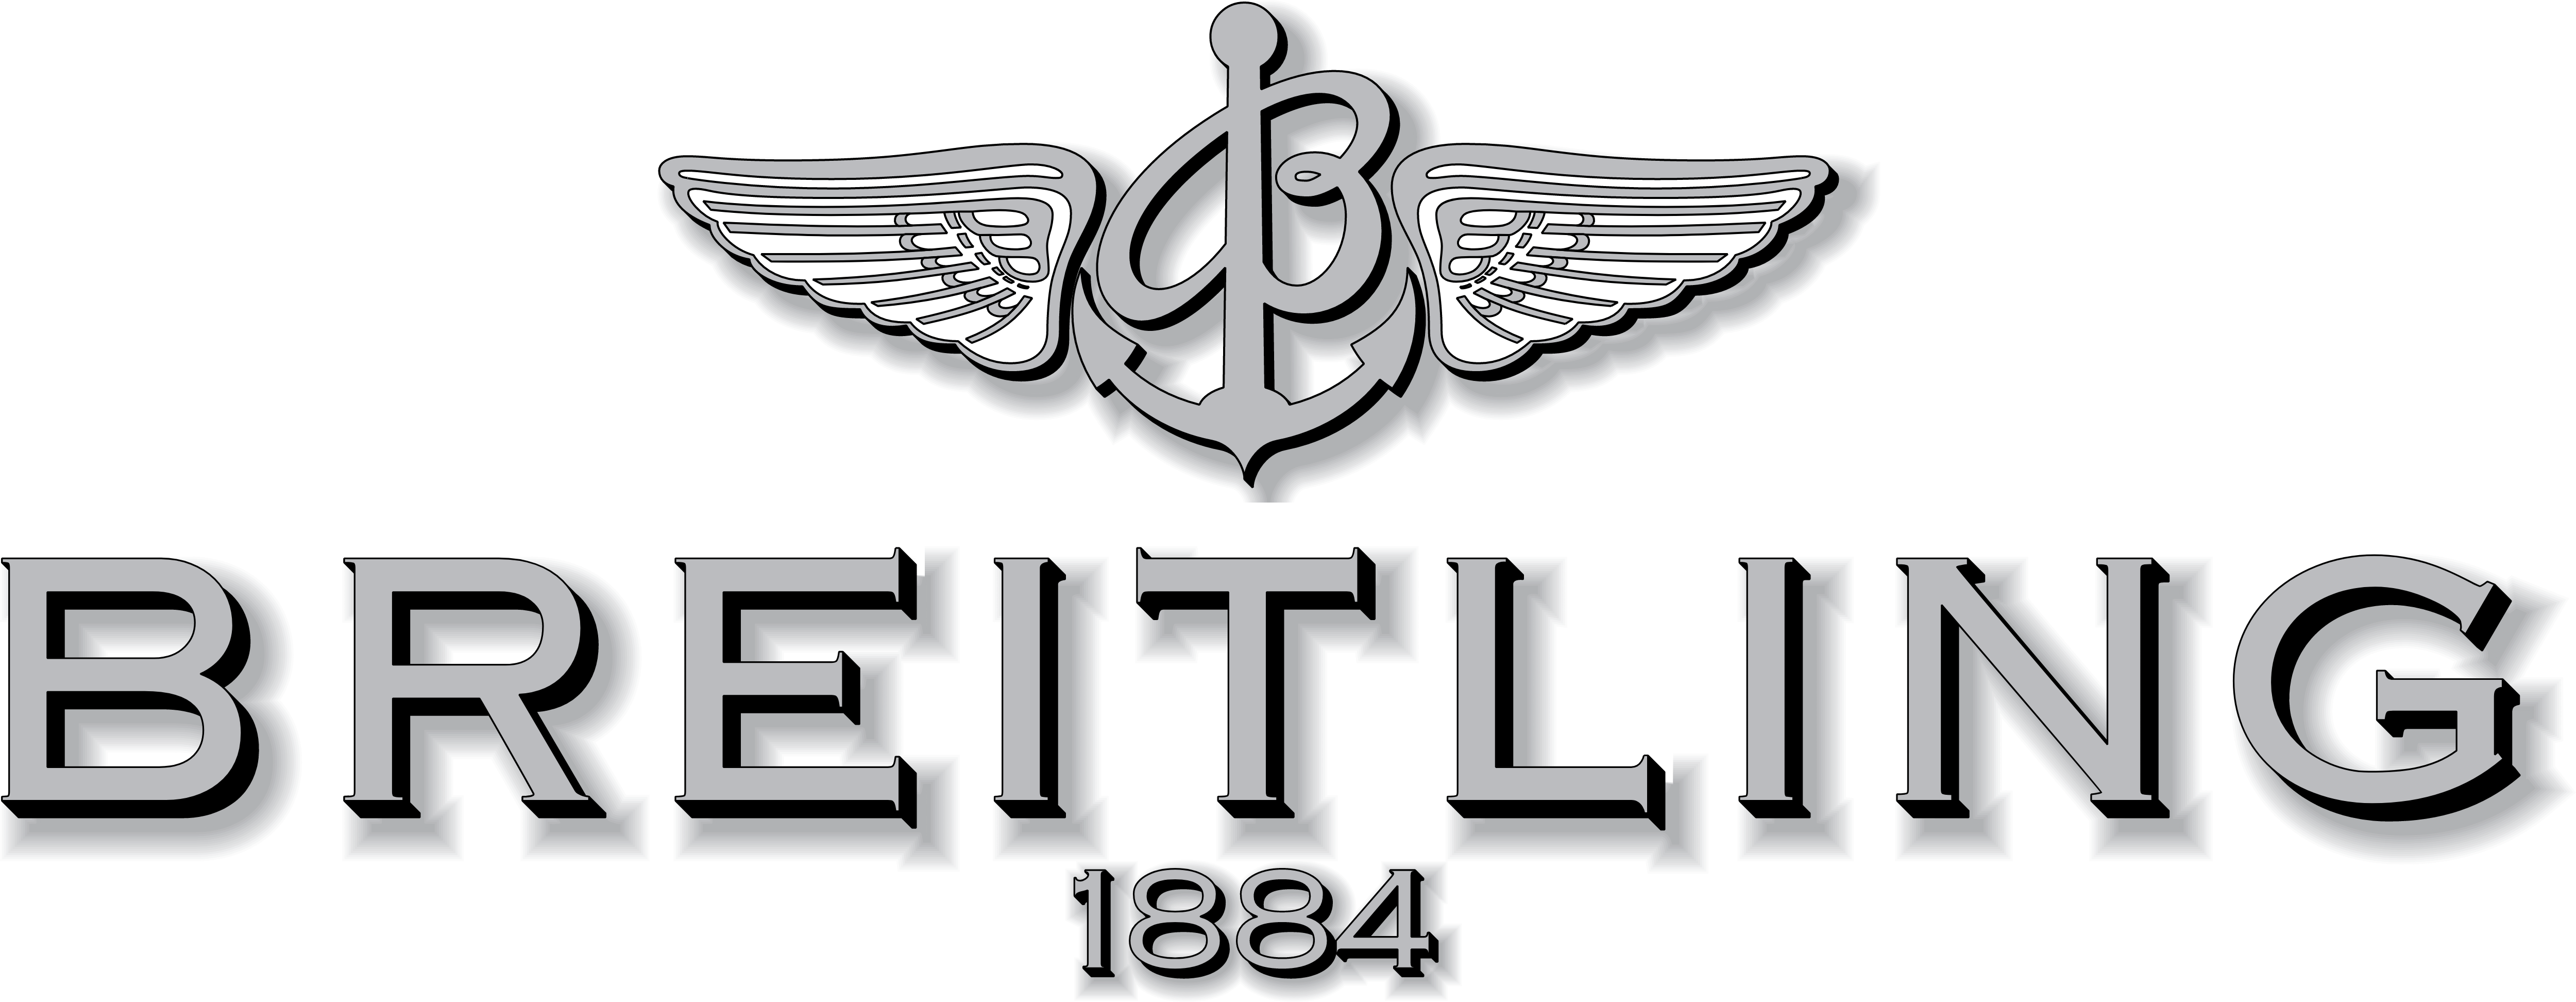 Breitling – Logos Download